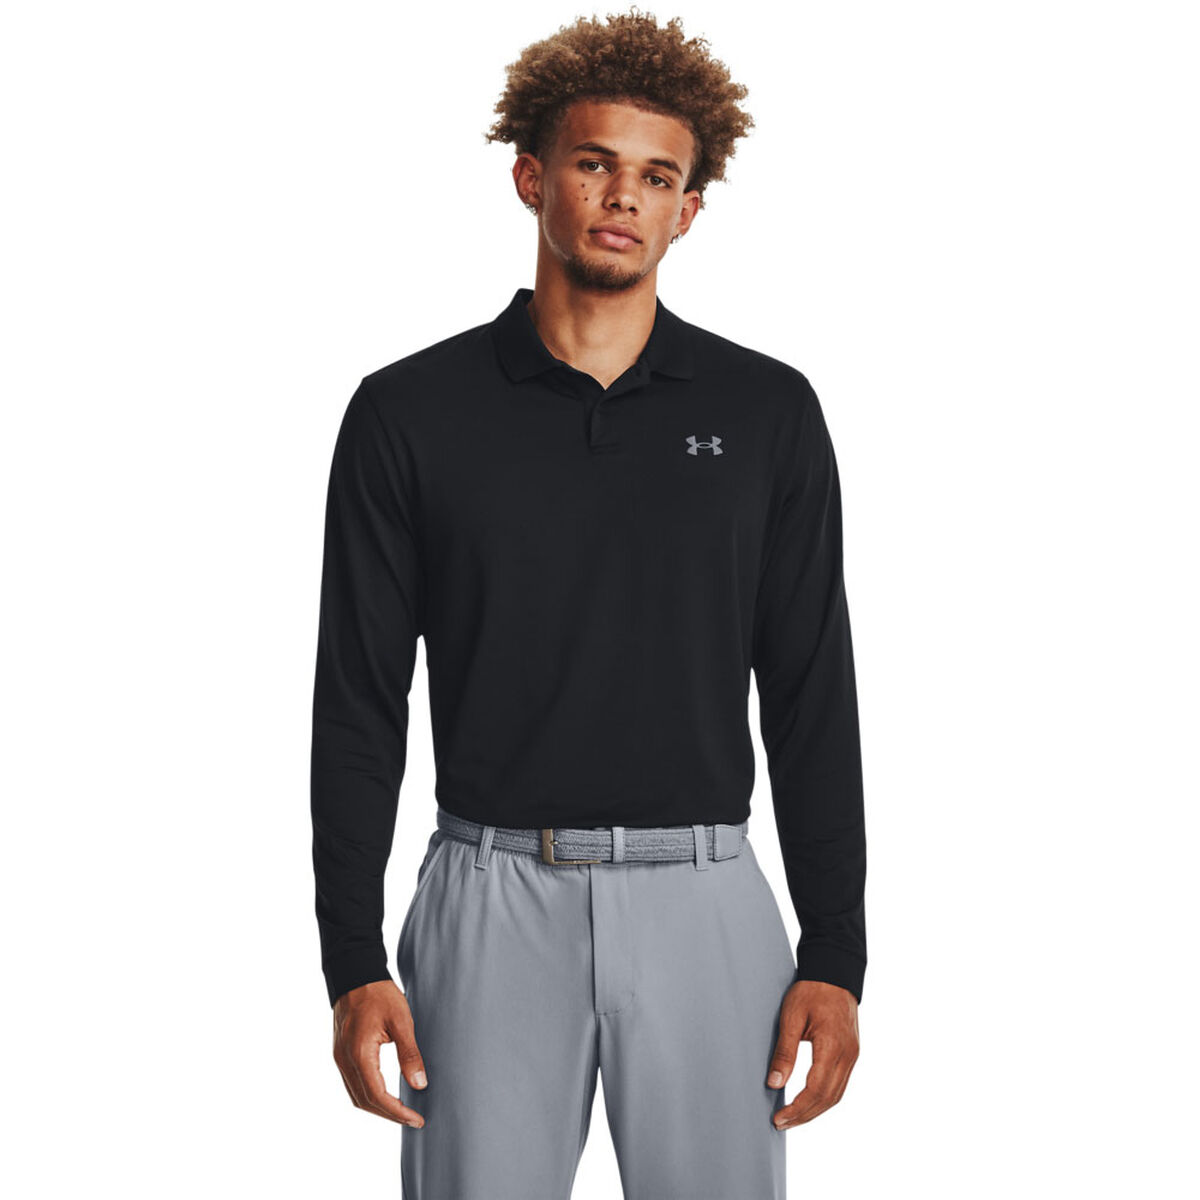 Under Armour Men’s Black and Grey Performance 3.0 Long Sleeve Golf Polo Shirt, Size: Medium | American Golf